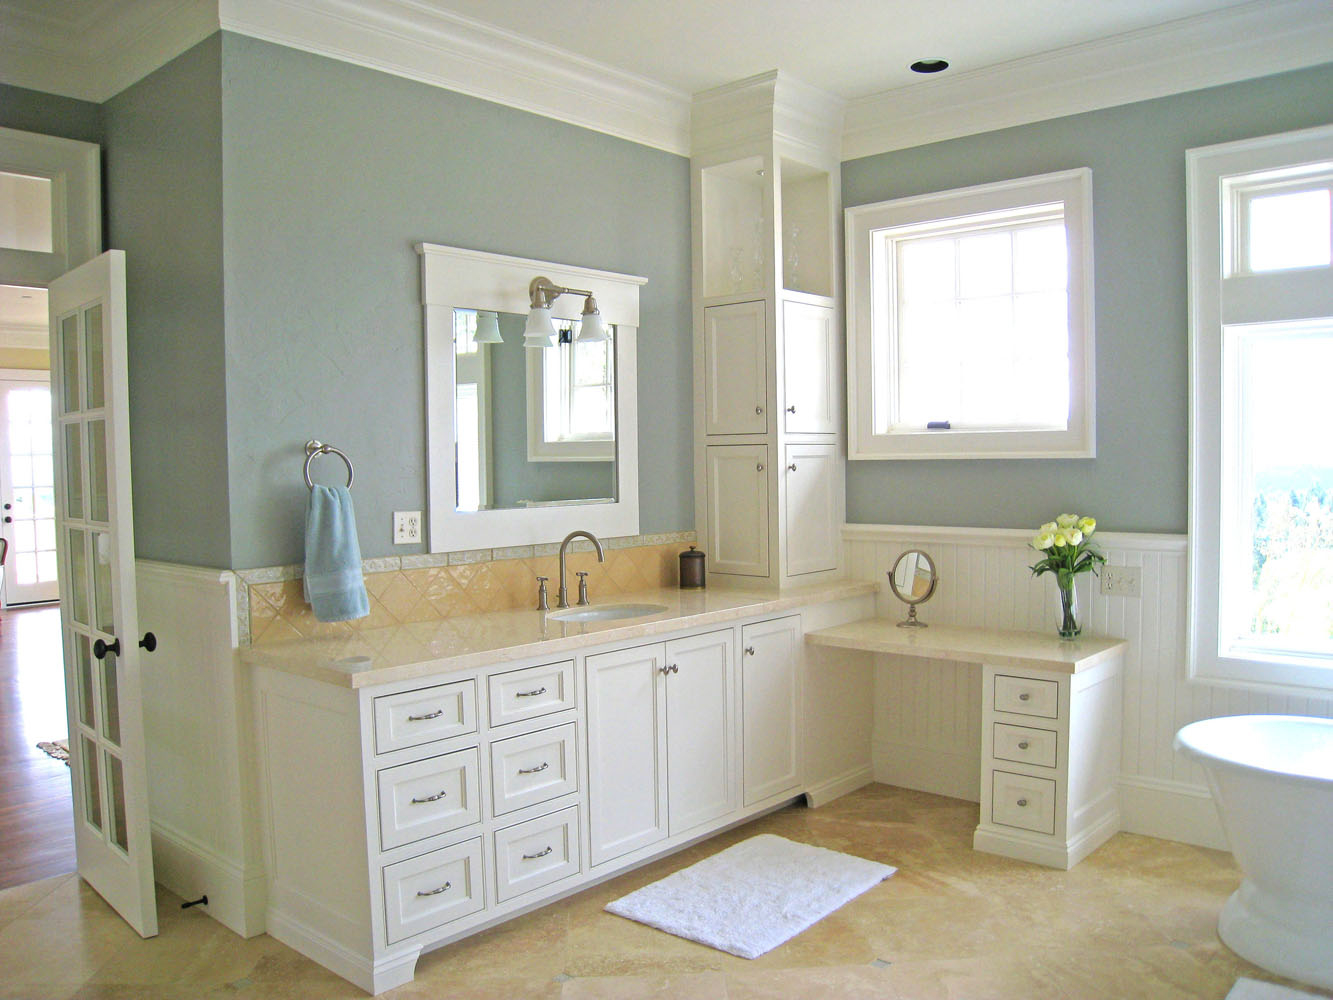 White Bathroom Cabinet Ideas The New Way Home Decor Fill The regarding dimensions 1333 X 1000